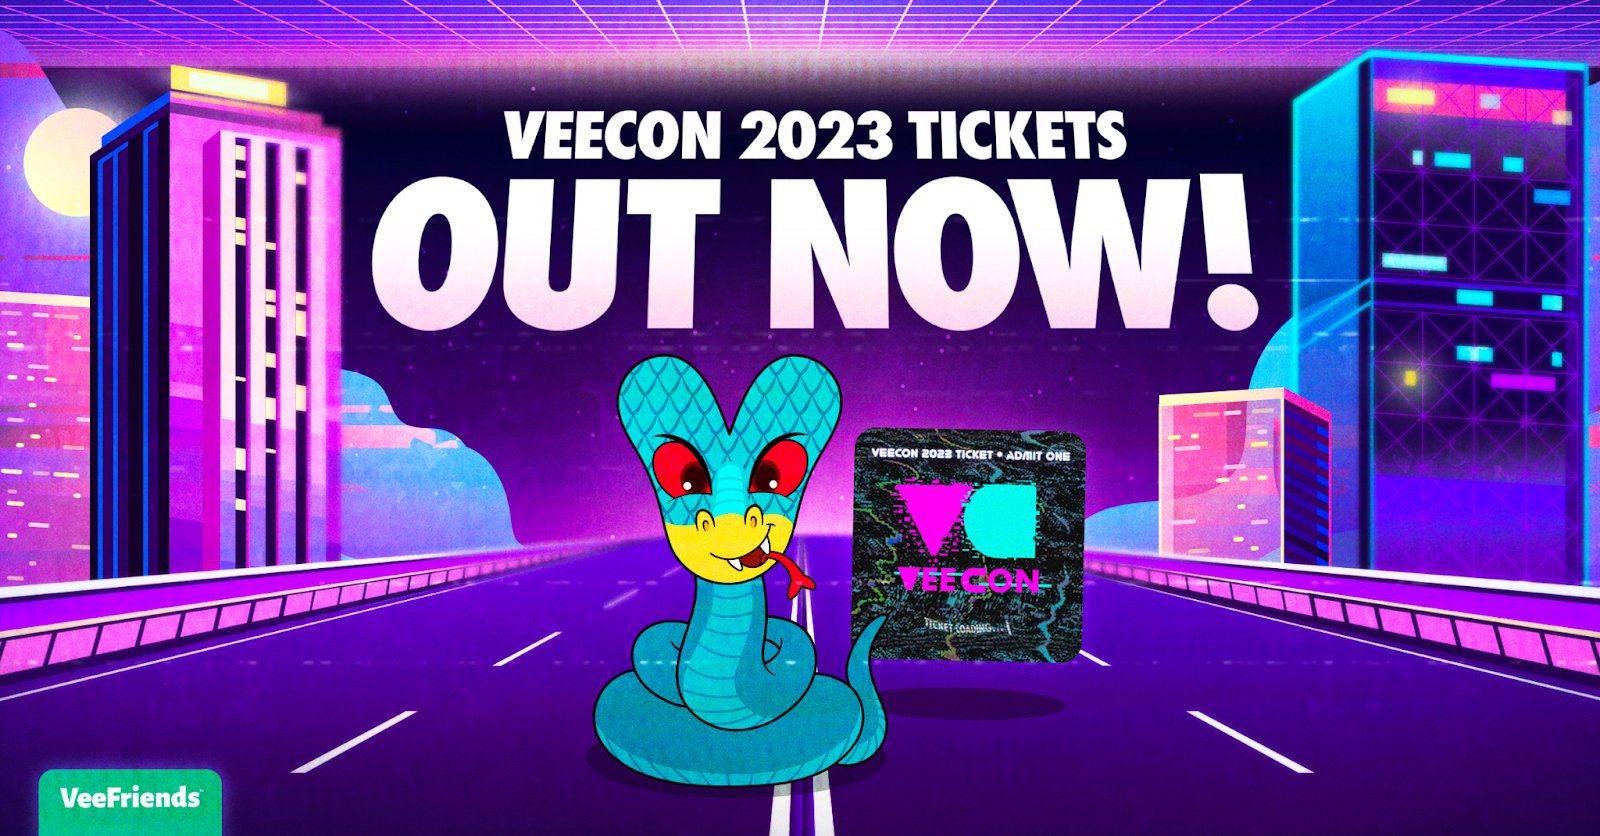 Veecon 2023 Tickets on sale